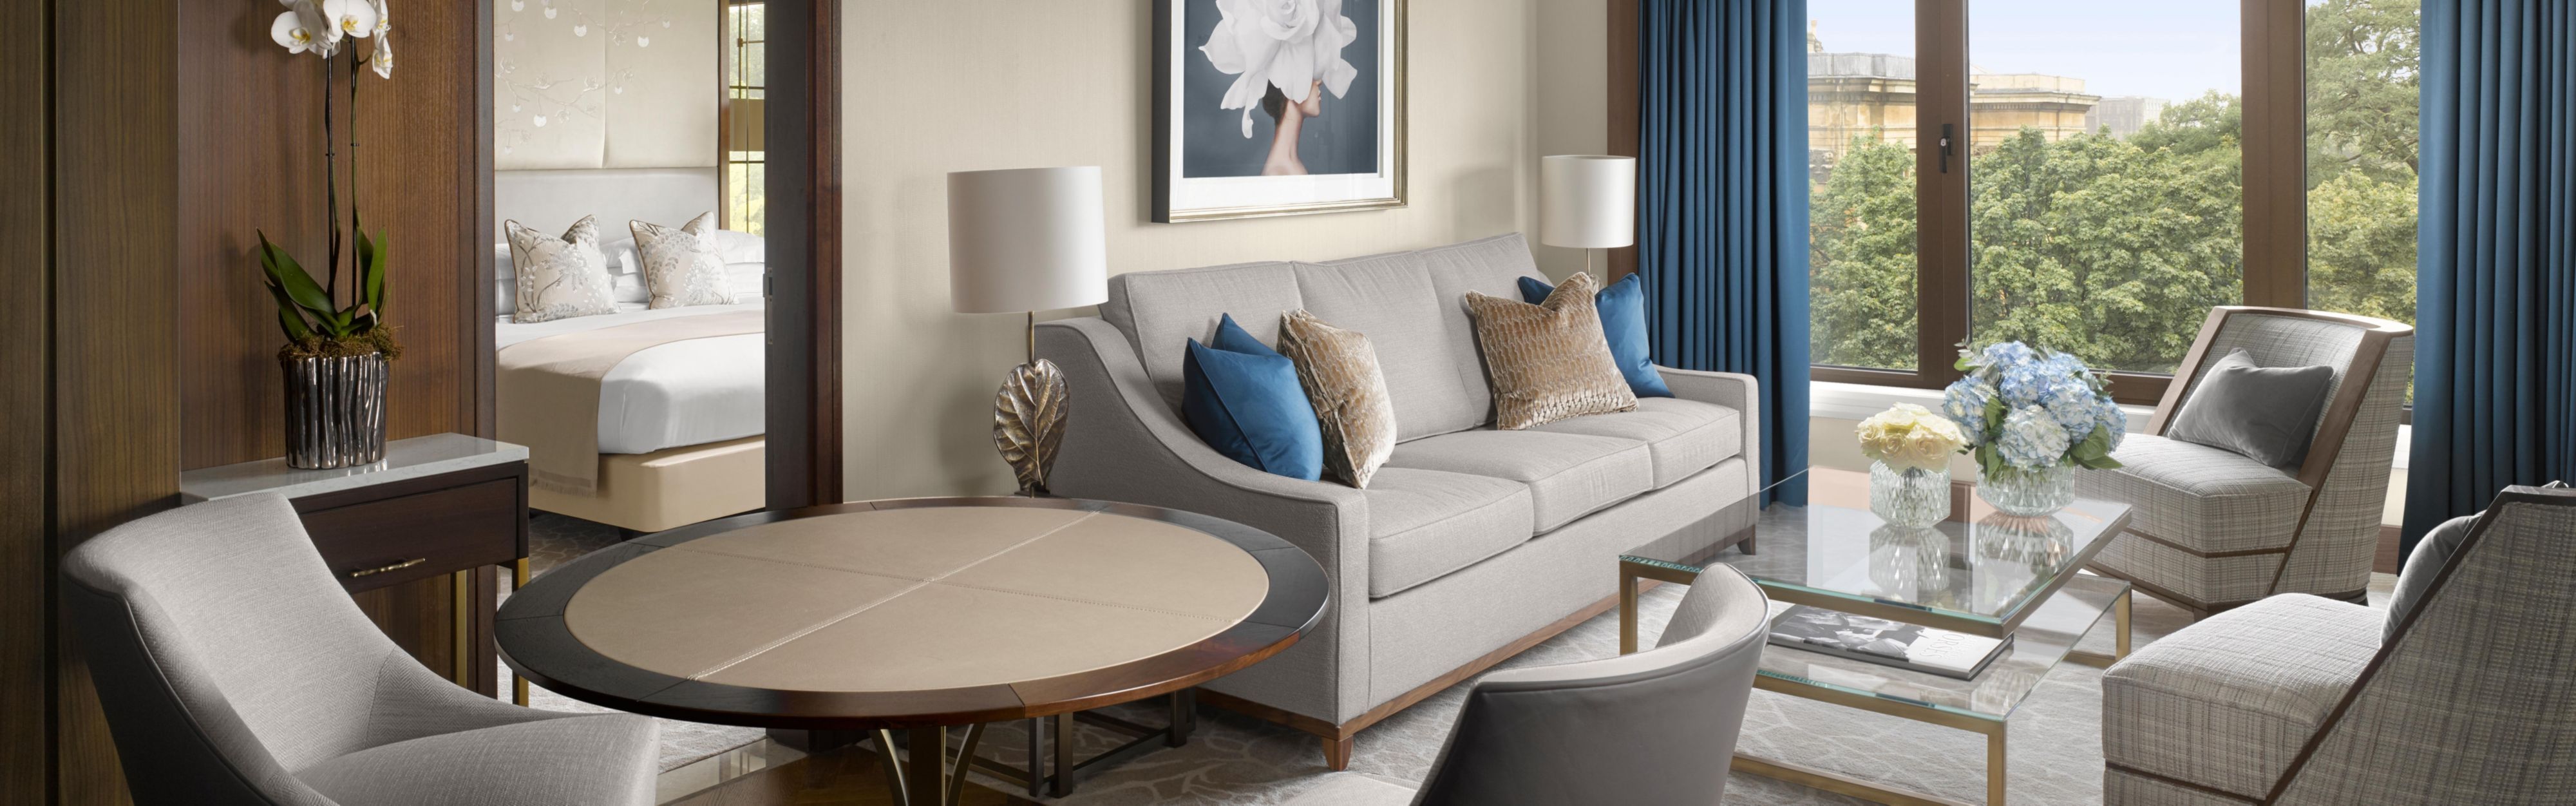 Mayfair Suite - Living Room - InterContinental London Park 